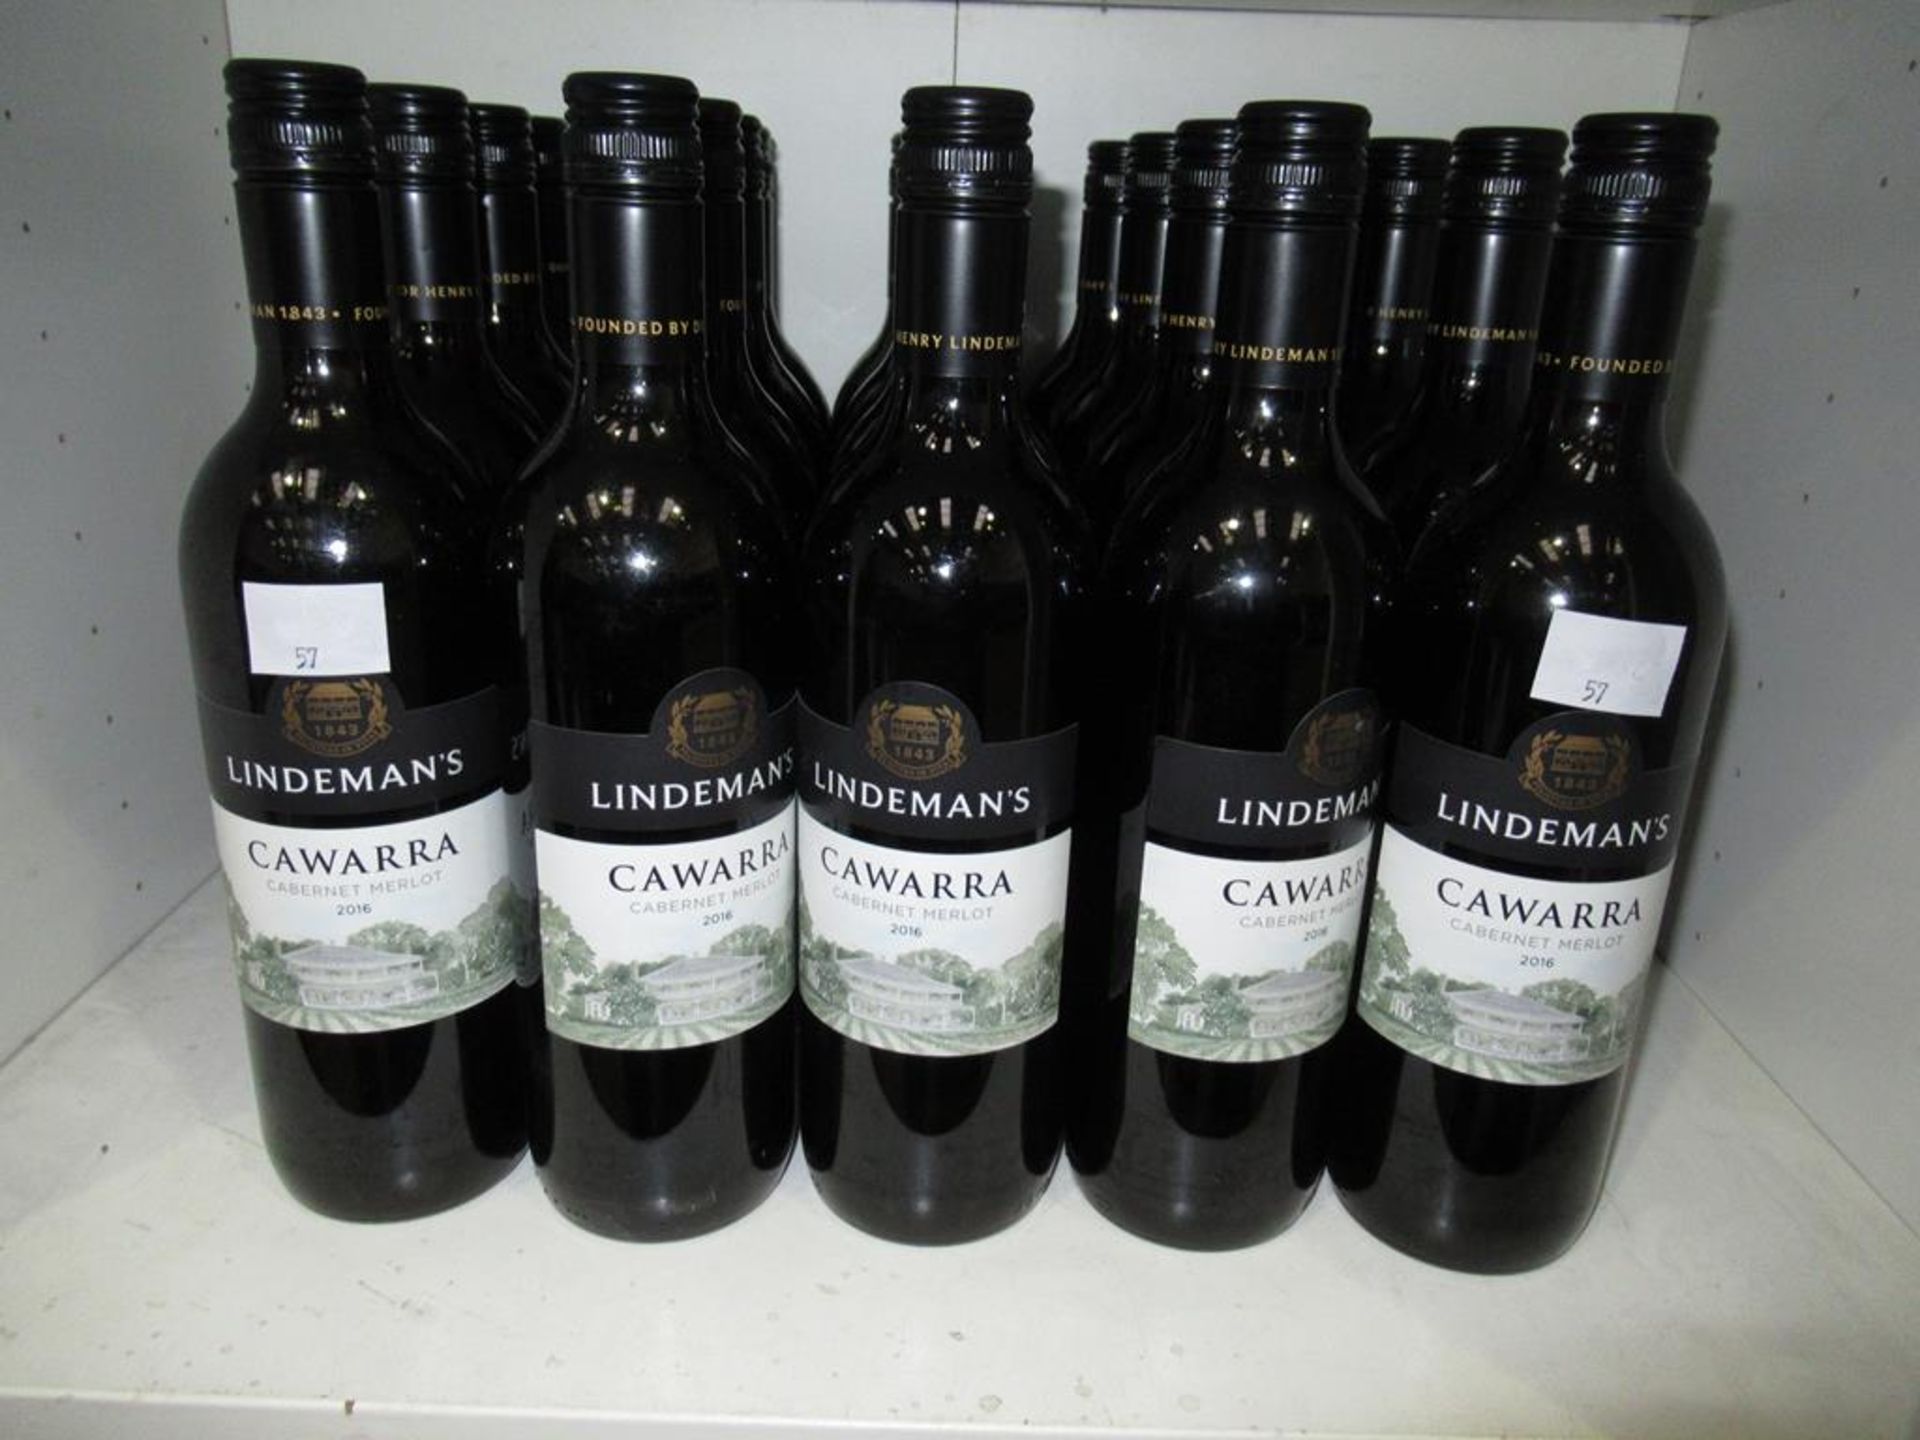 Twenty bottles of Lindeman's Cawarra Cabernet Merlot 2016 red wine